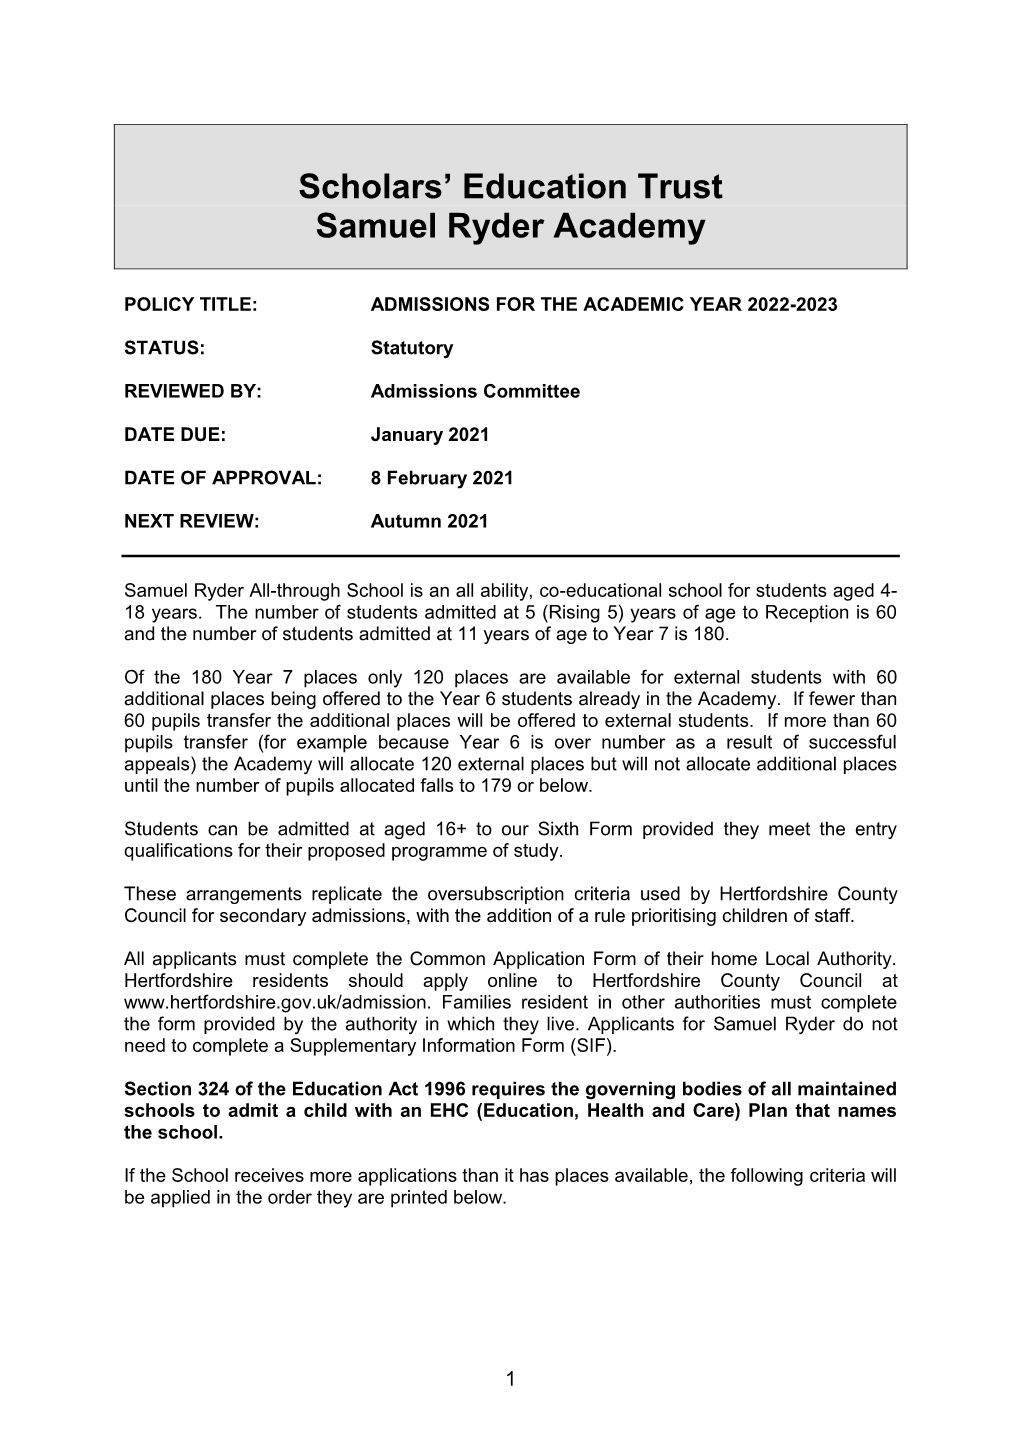 Scholars' Education Trust Samuel Ryder Academy